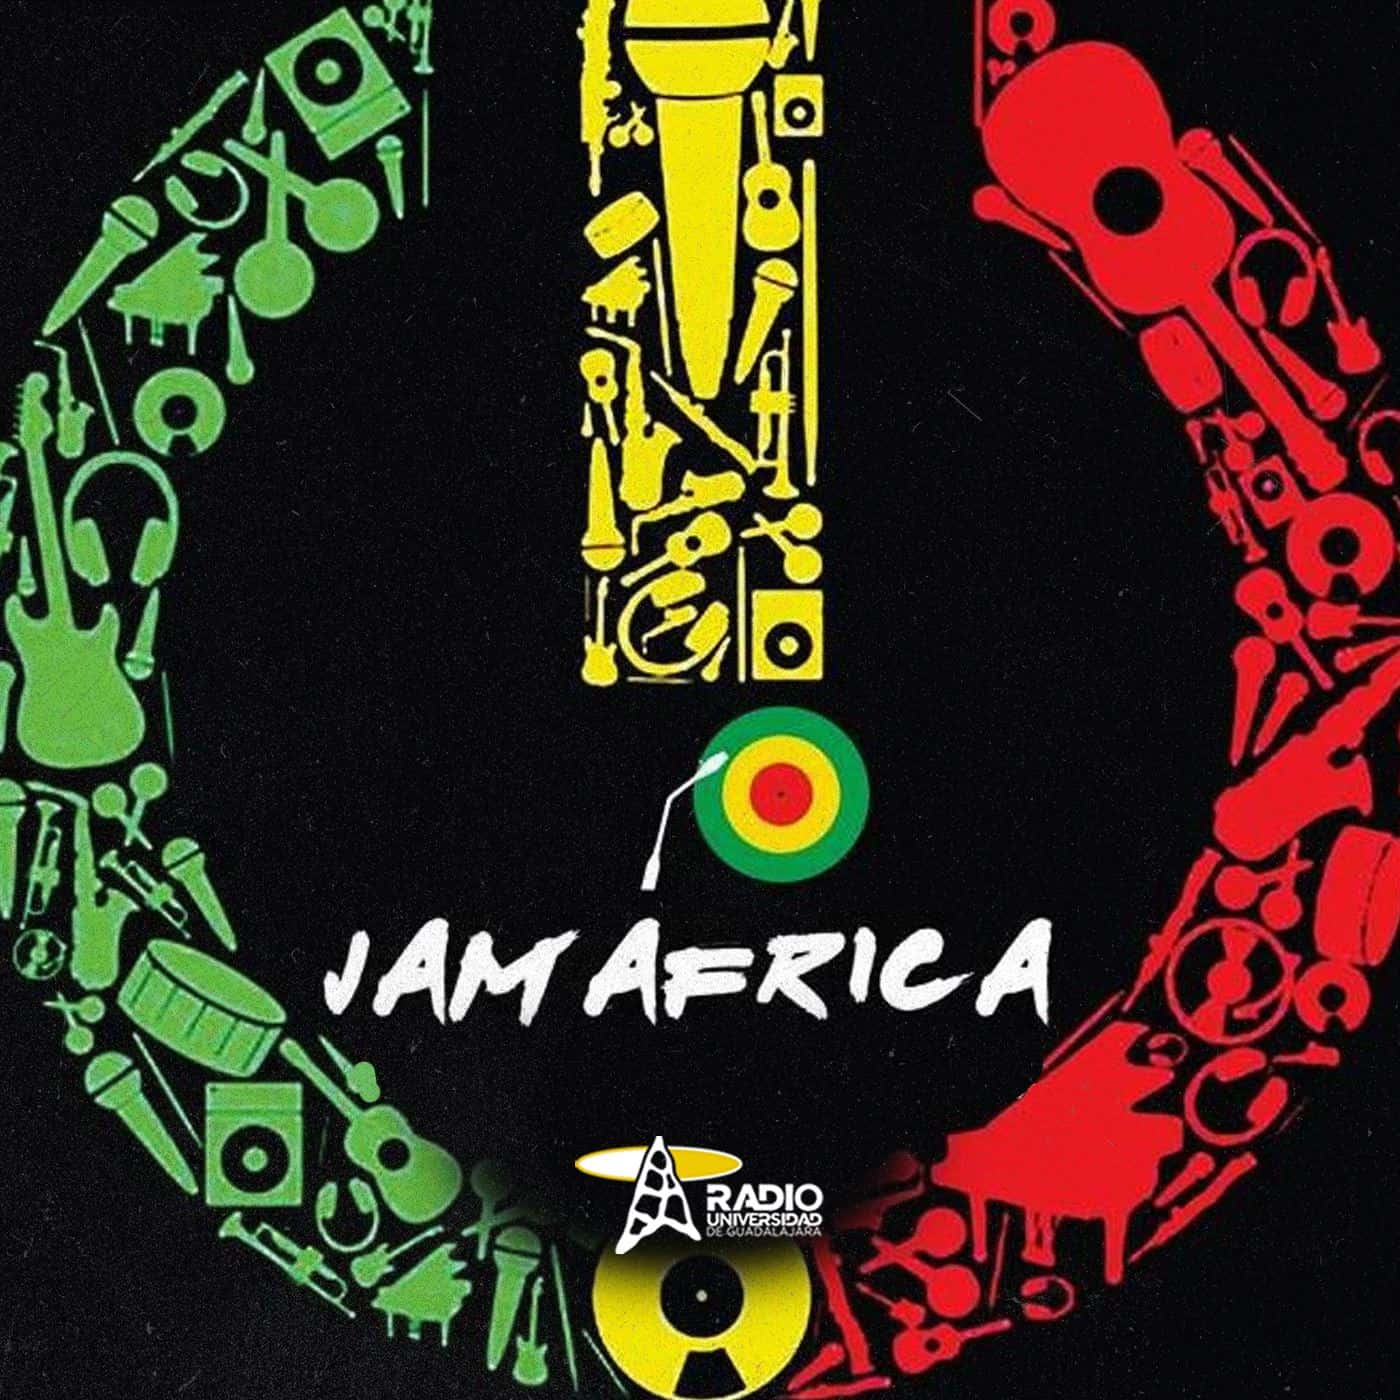 jamafrica